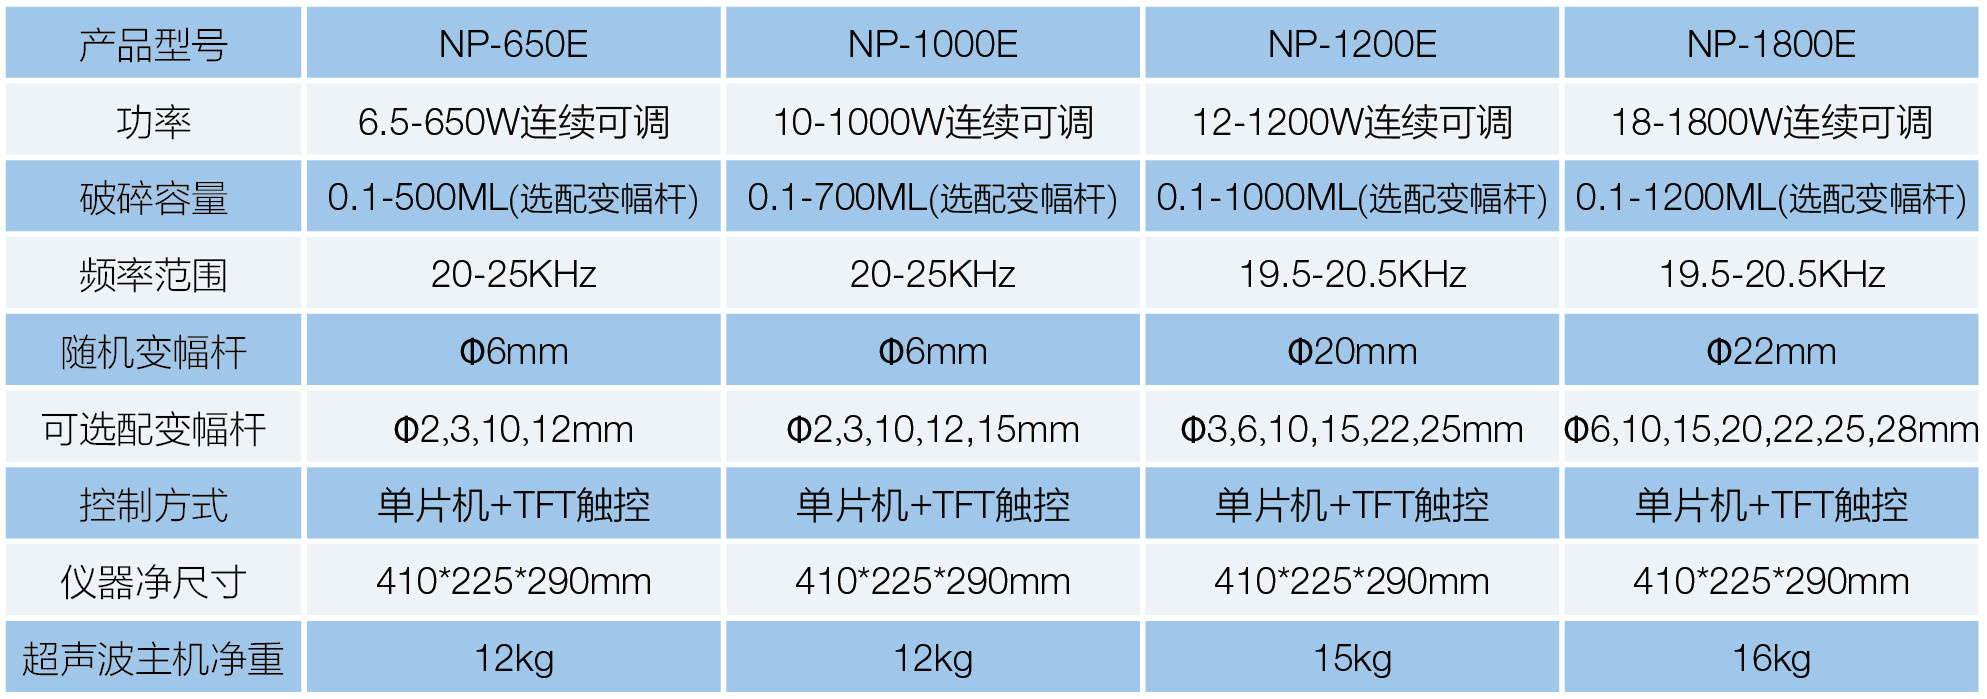 NP-1200E超声波细胞粉碎机(图1)